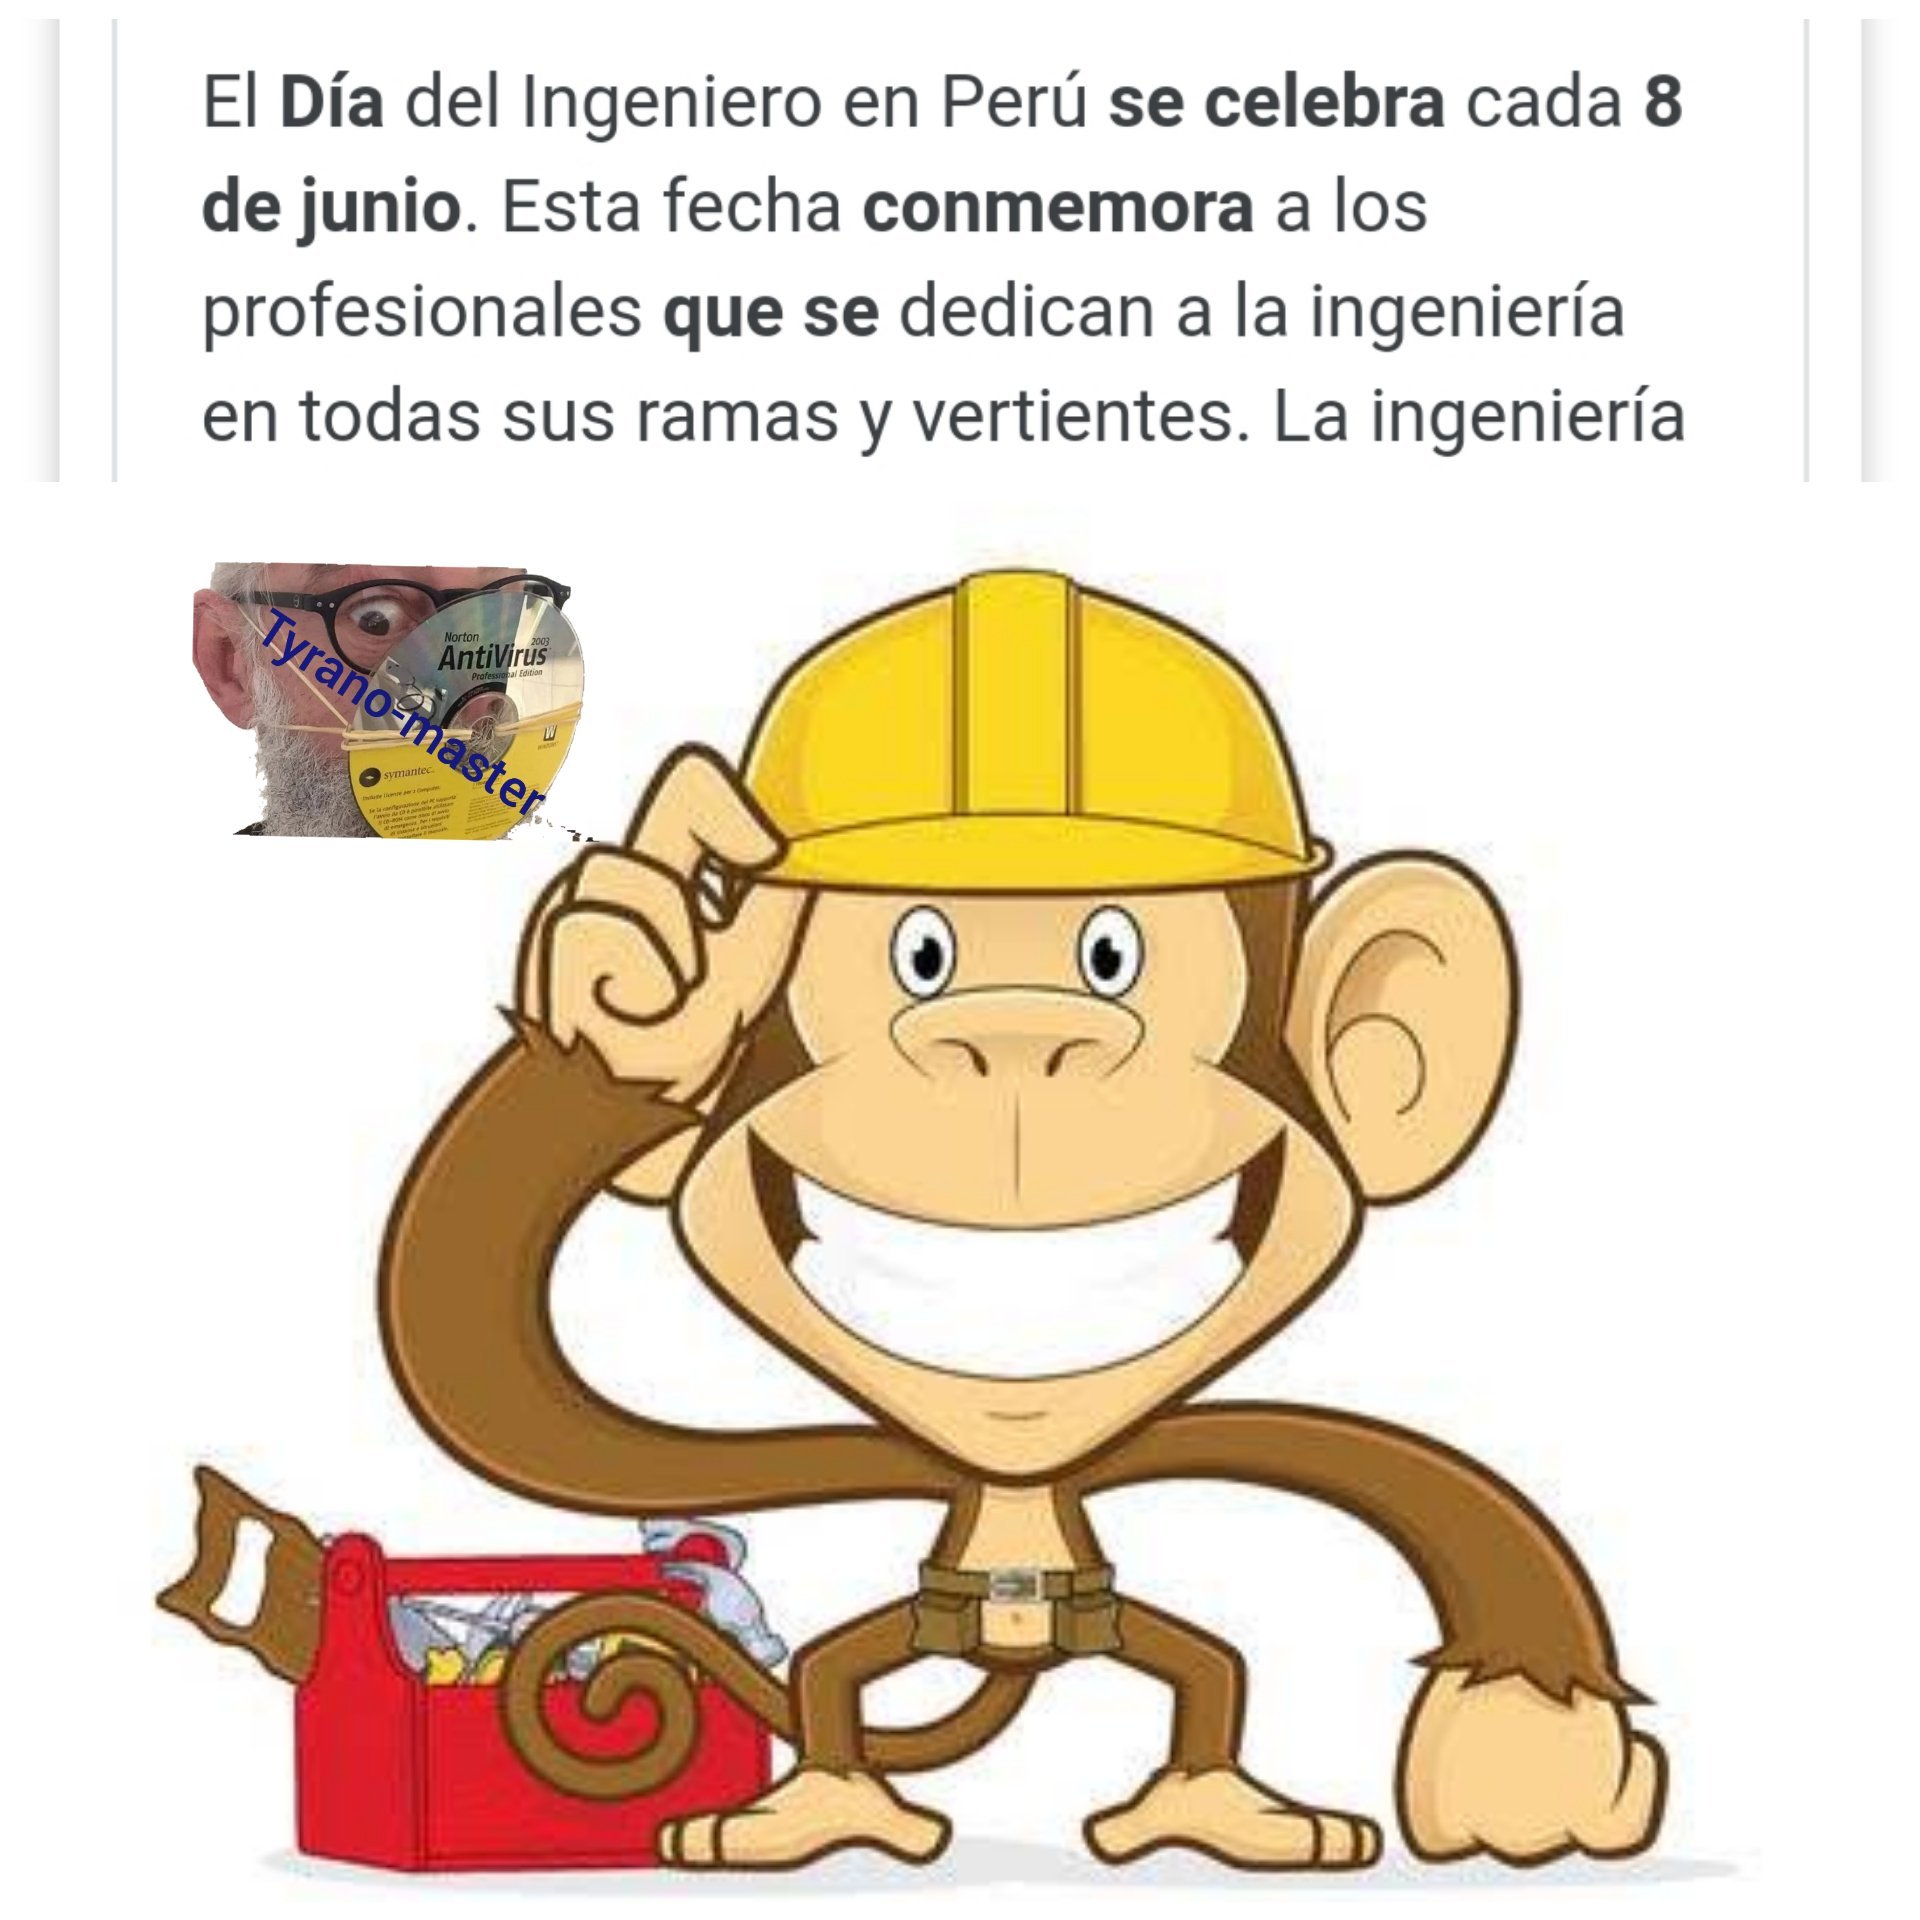 Perú - meme